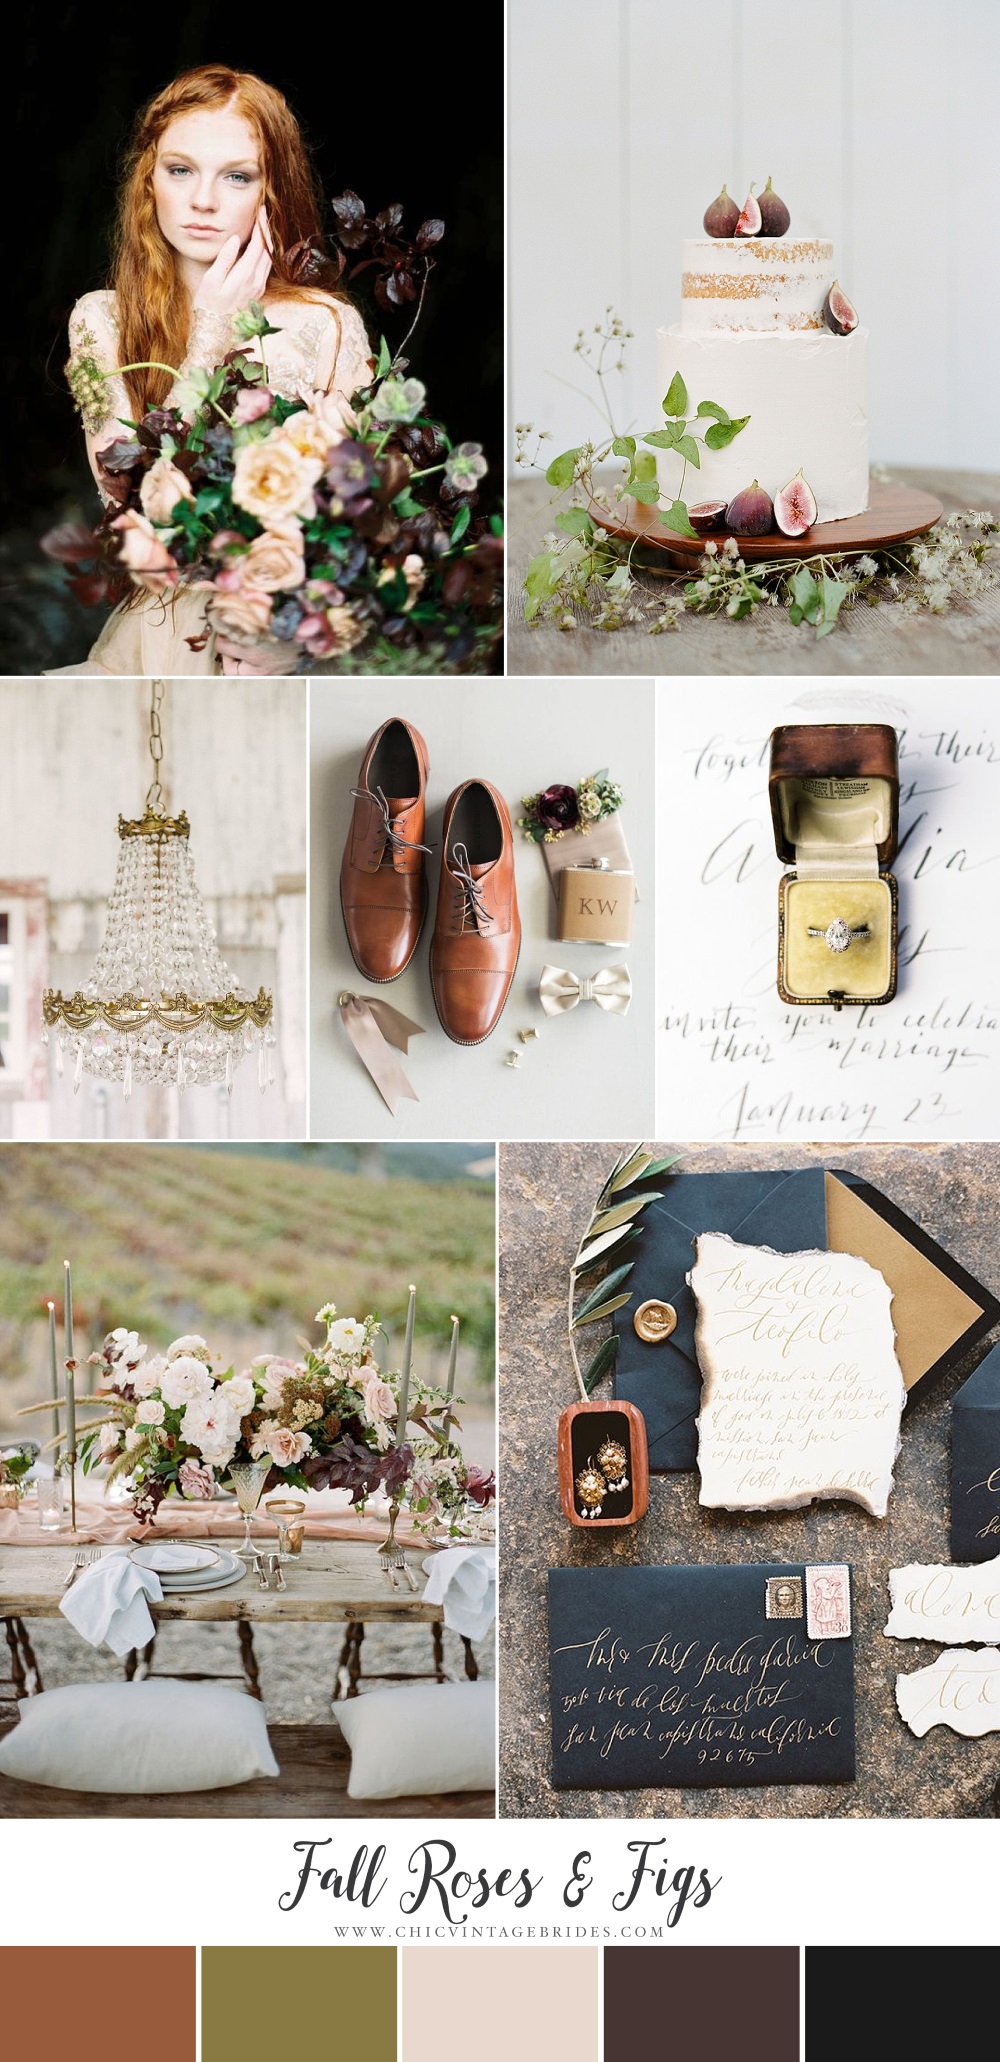 Fall Roses & Figs - Romantic Autumn Winery Wedding Inspiration